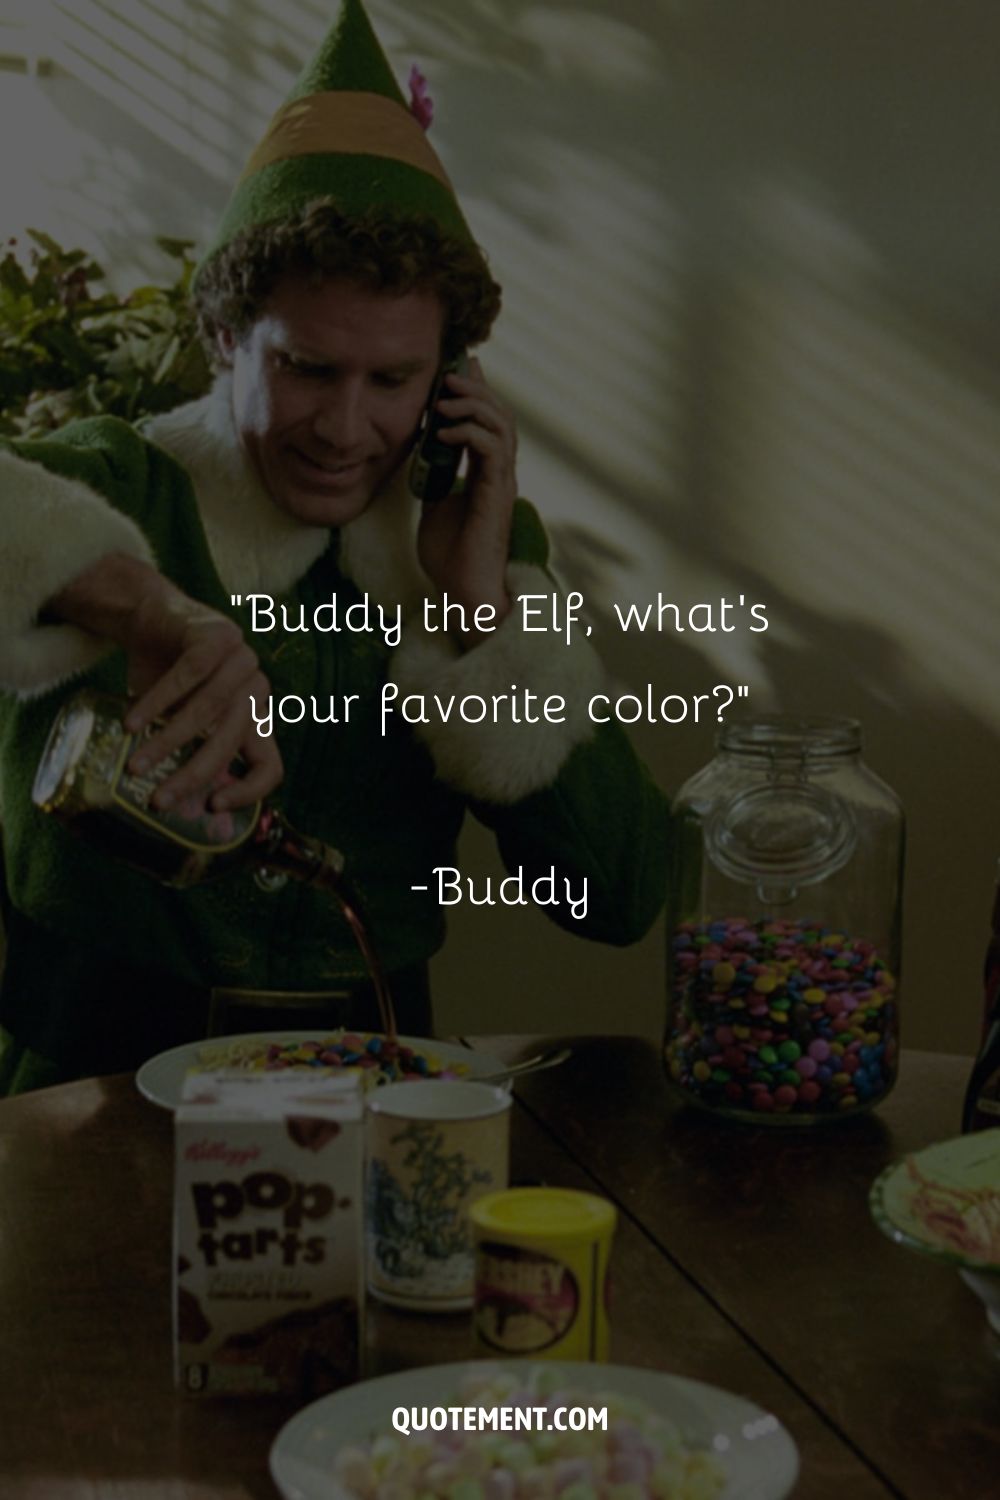 Buddy the Elf talks on the phone.